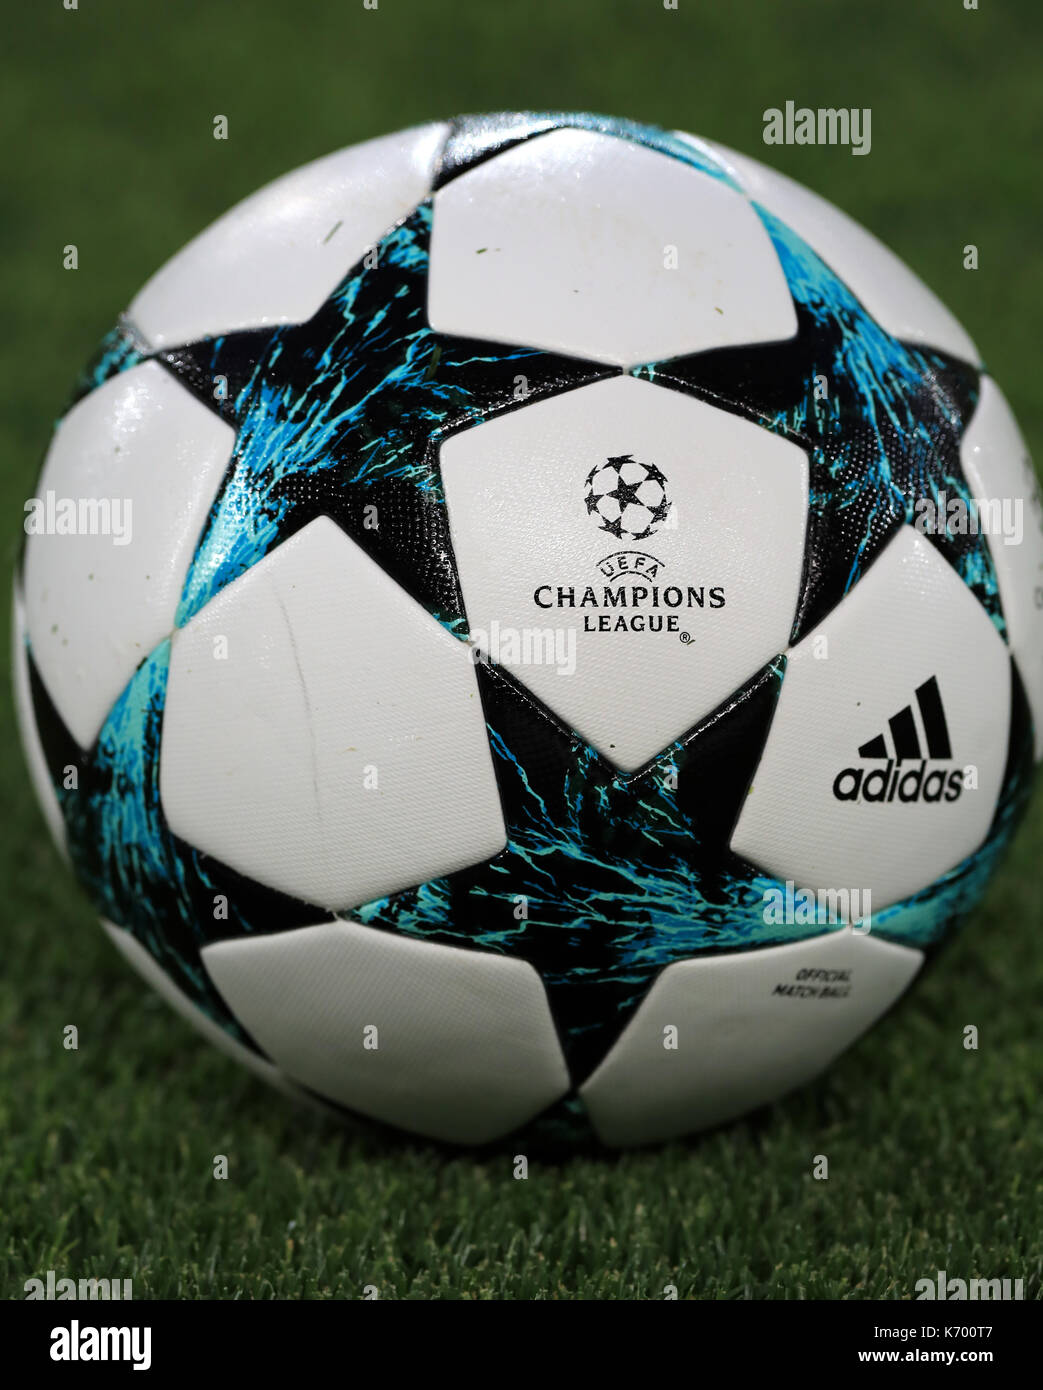 Uefa champions league ball fotografías e imágenes de alta resolución - Alamy